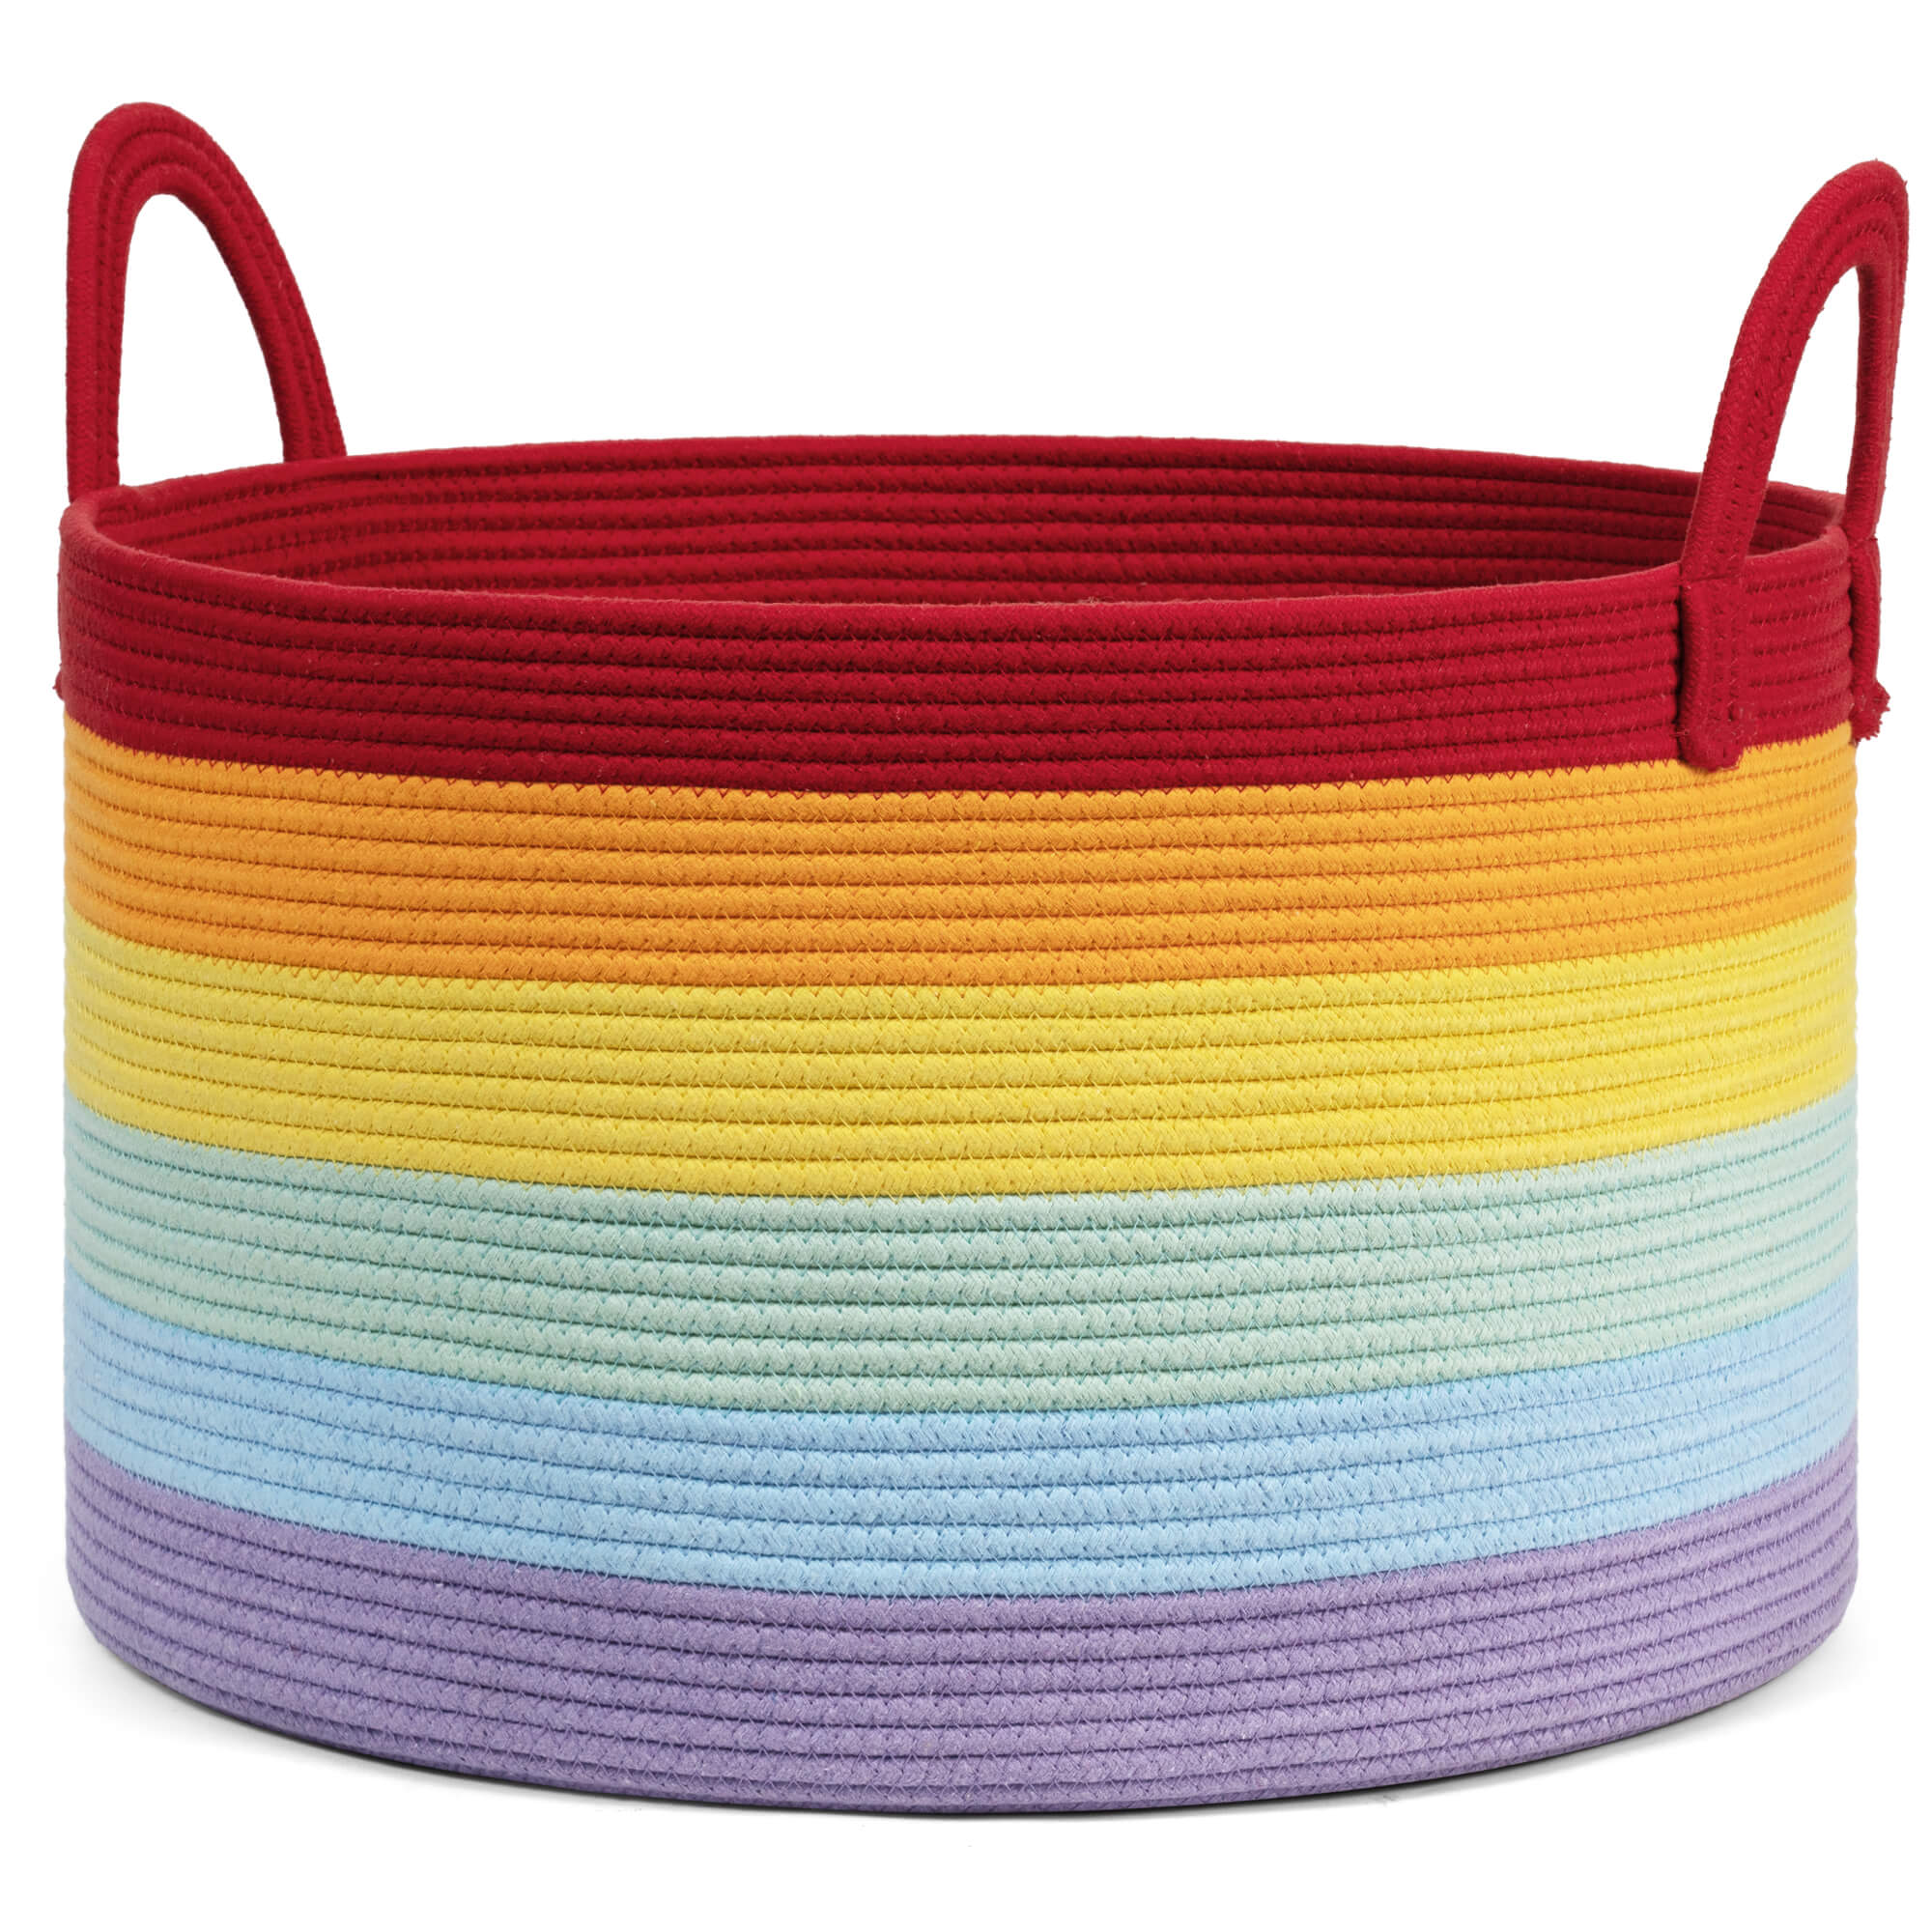 Goodpick Rainbow Large Wide Basket